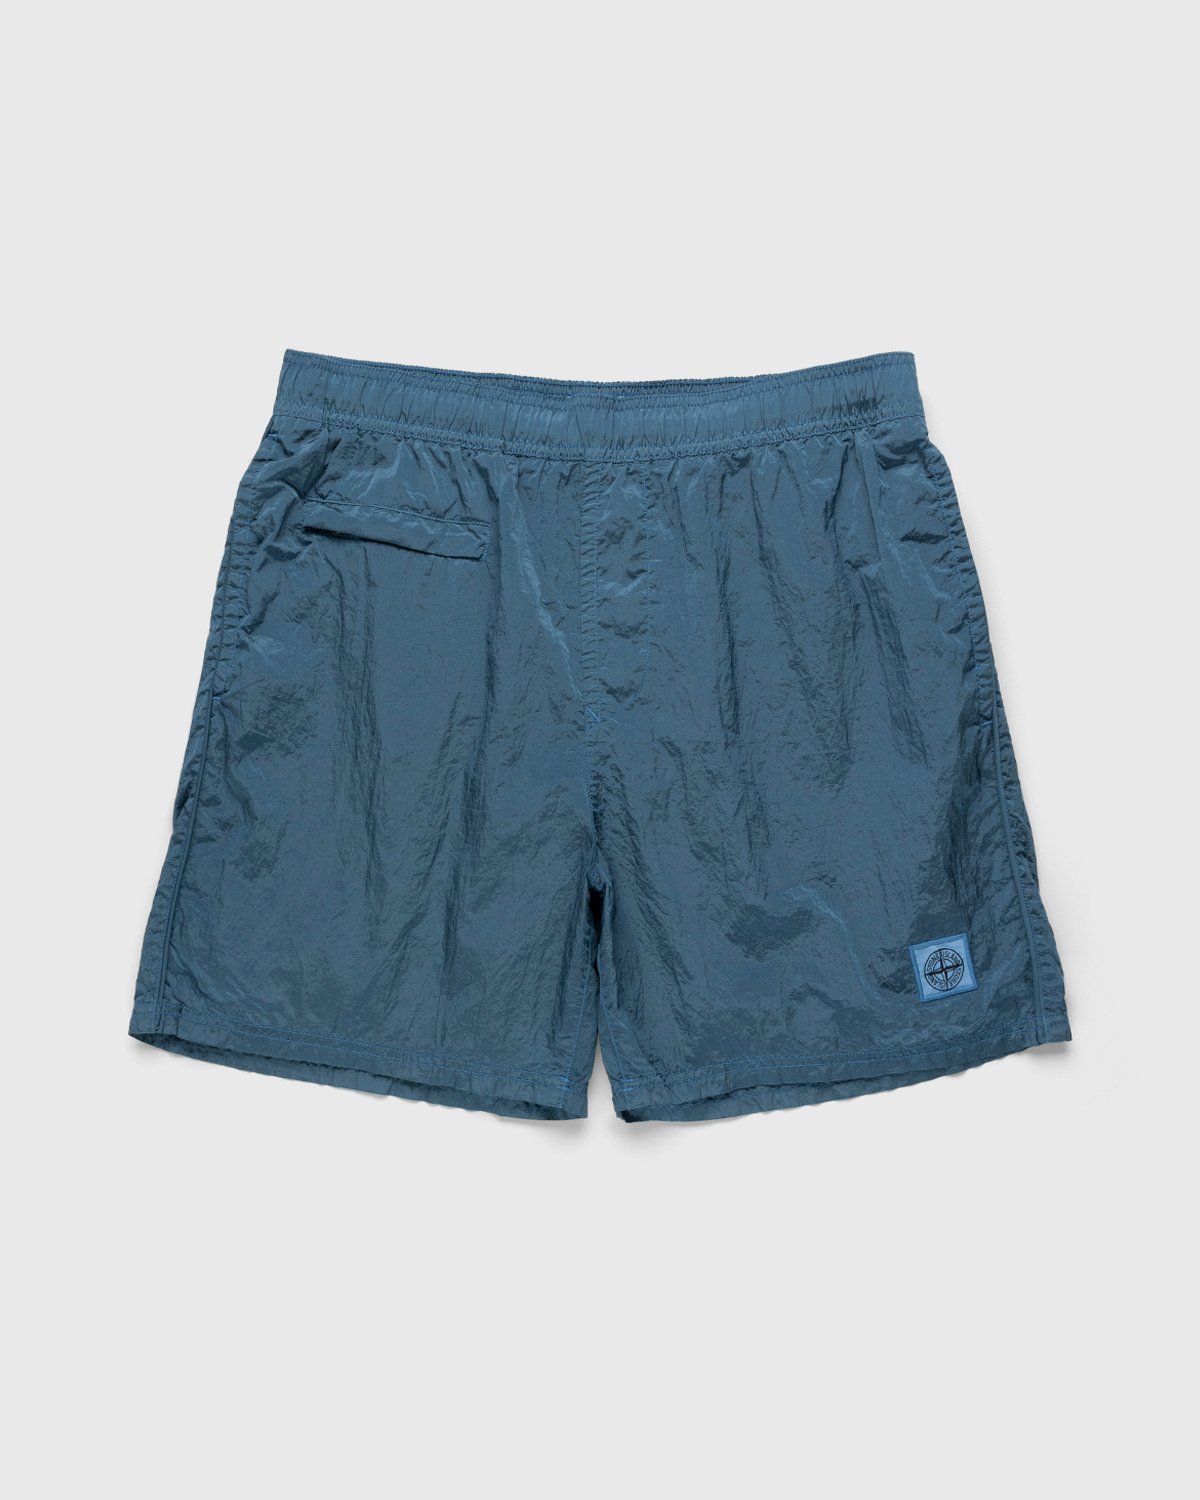 Stone Island - B0243 Nylon Metal Swim Shorts Mid Blue - Clothing - Blue - Image 1